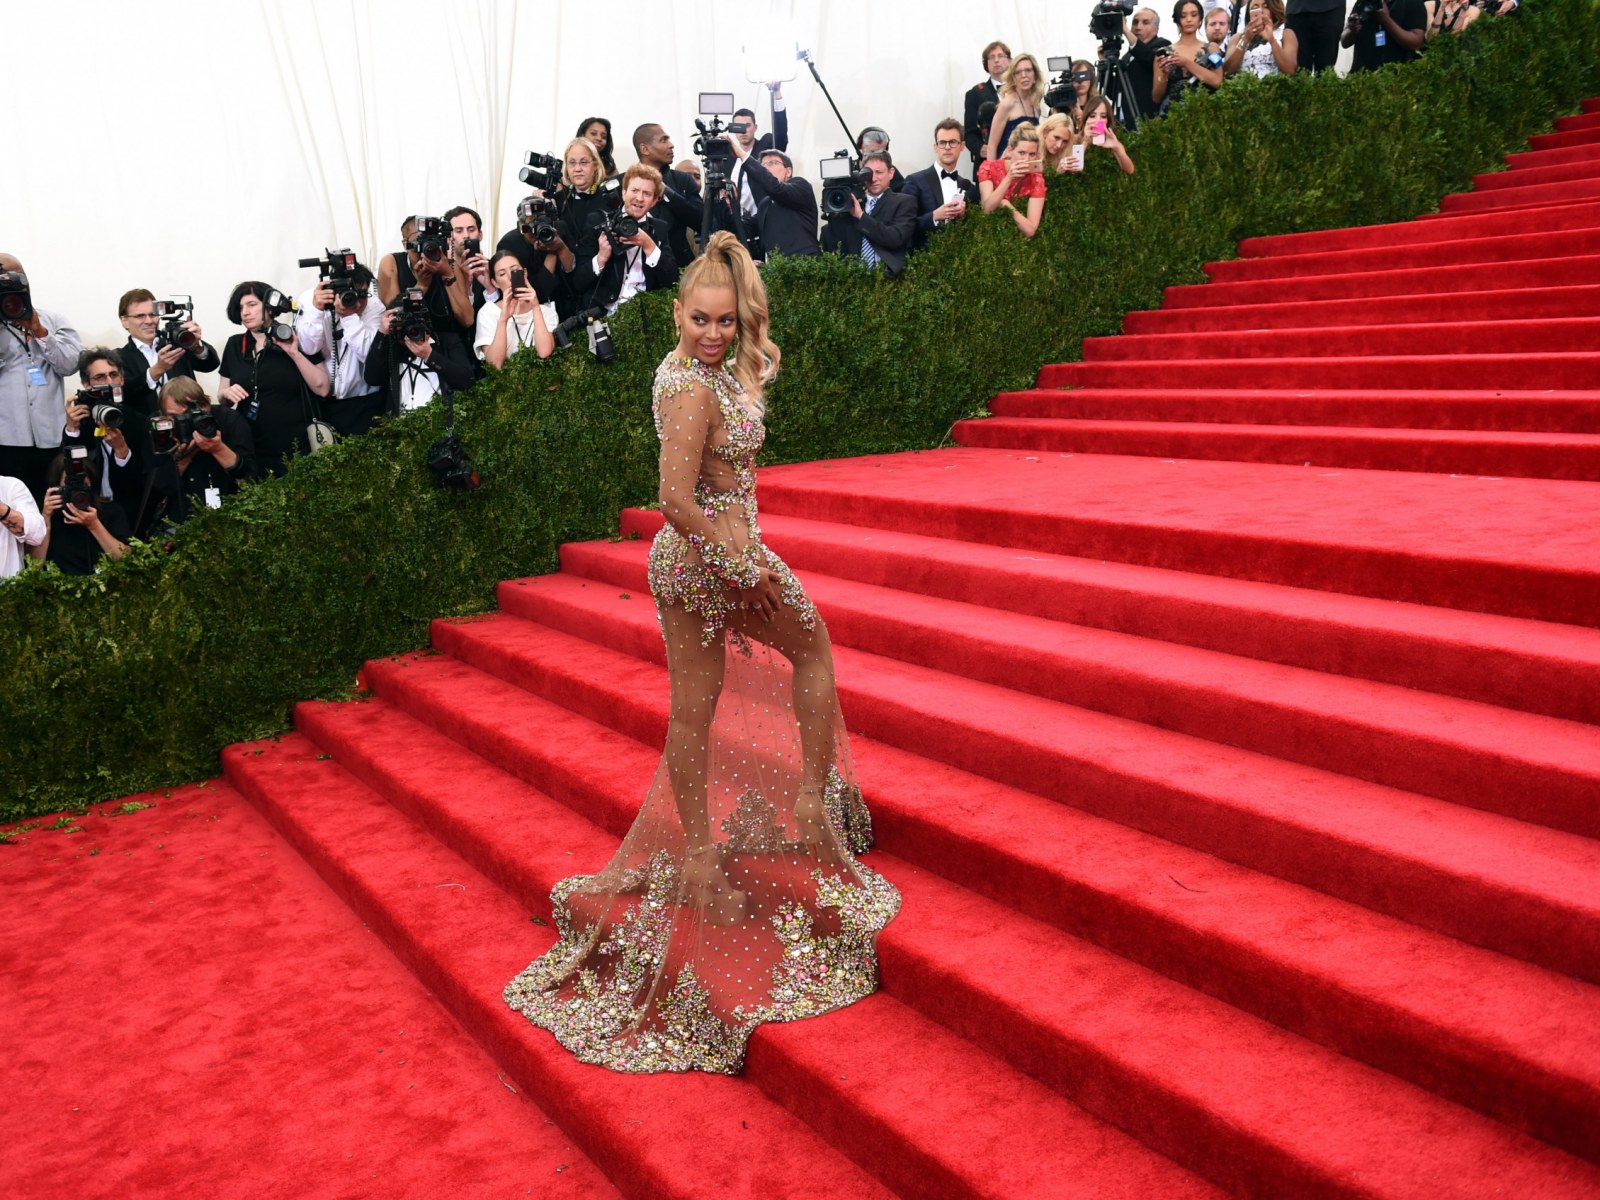 Met Gala 2018 red carpet looks: Rihanna, Cardi B, Madonna